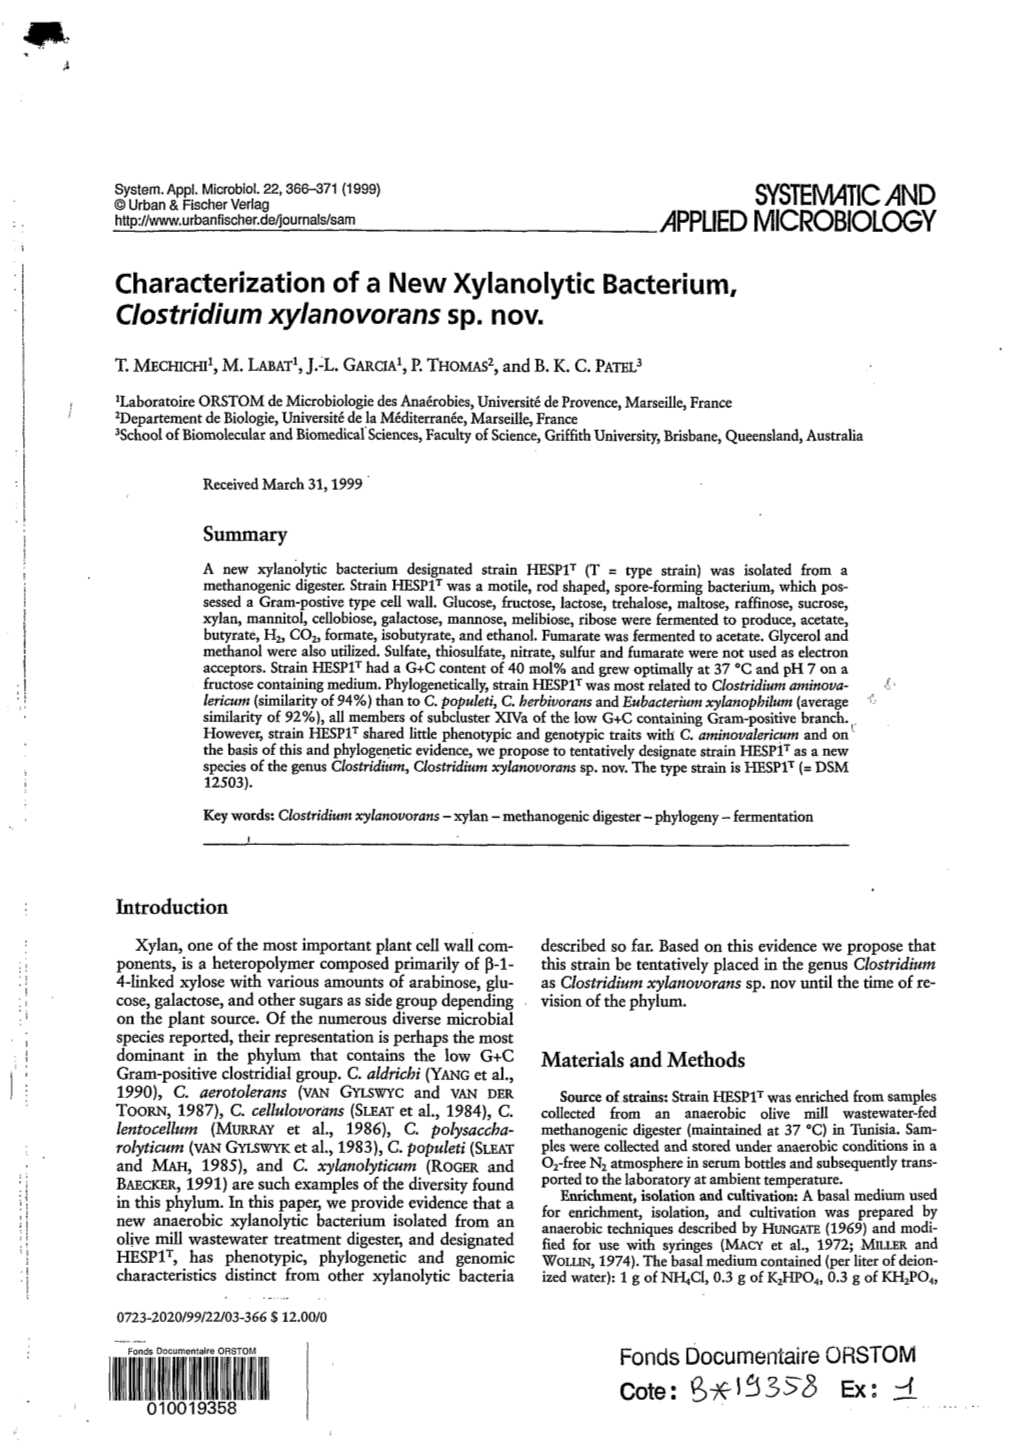 Characterization of a New Xylanolytic Bacterium, Clostridium Xylanovorans Sp